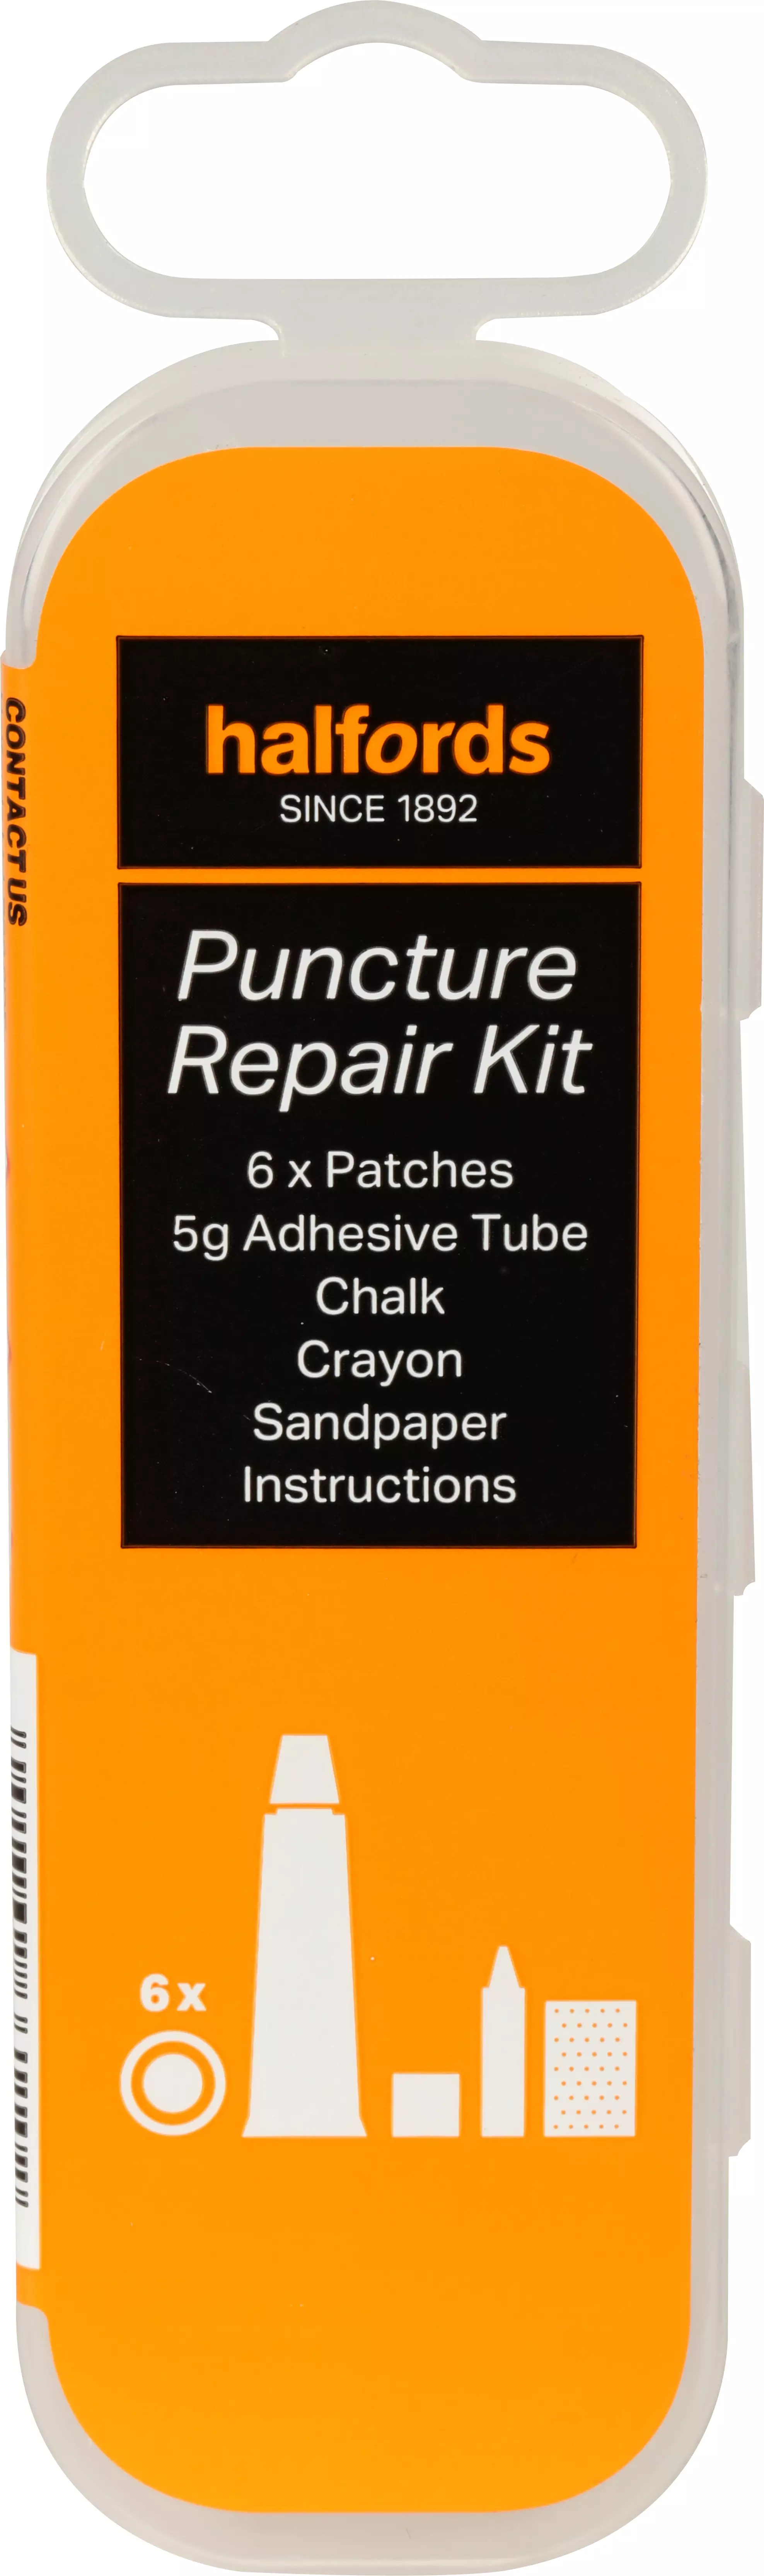 bicycle puncture repair kit ireland